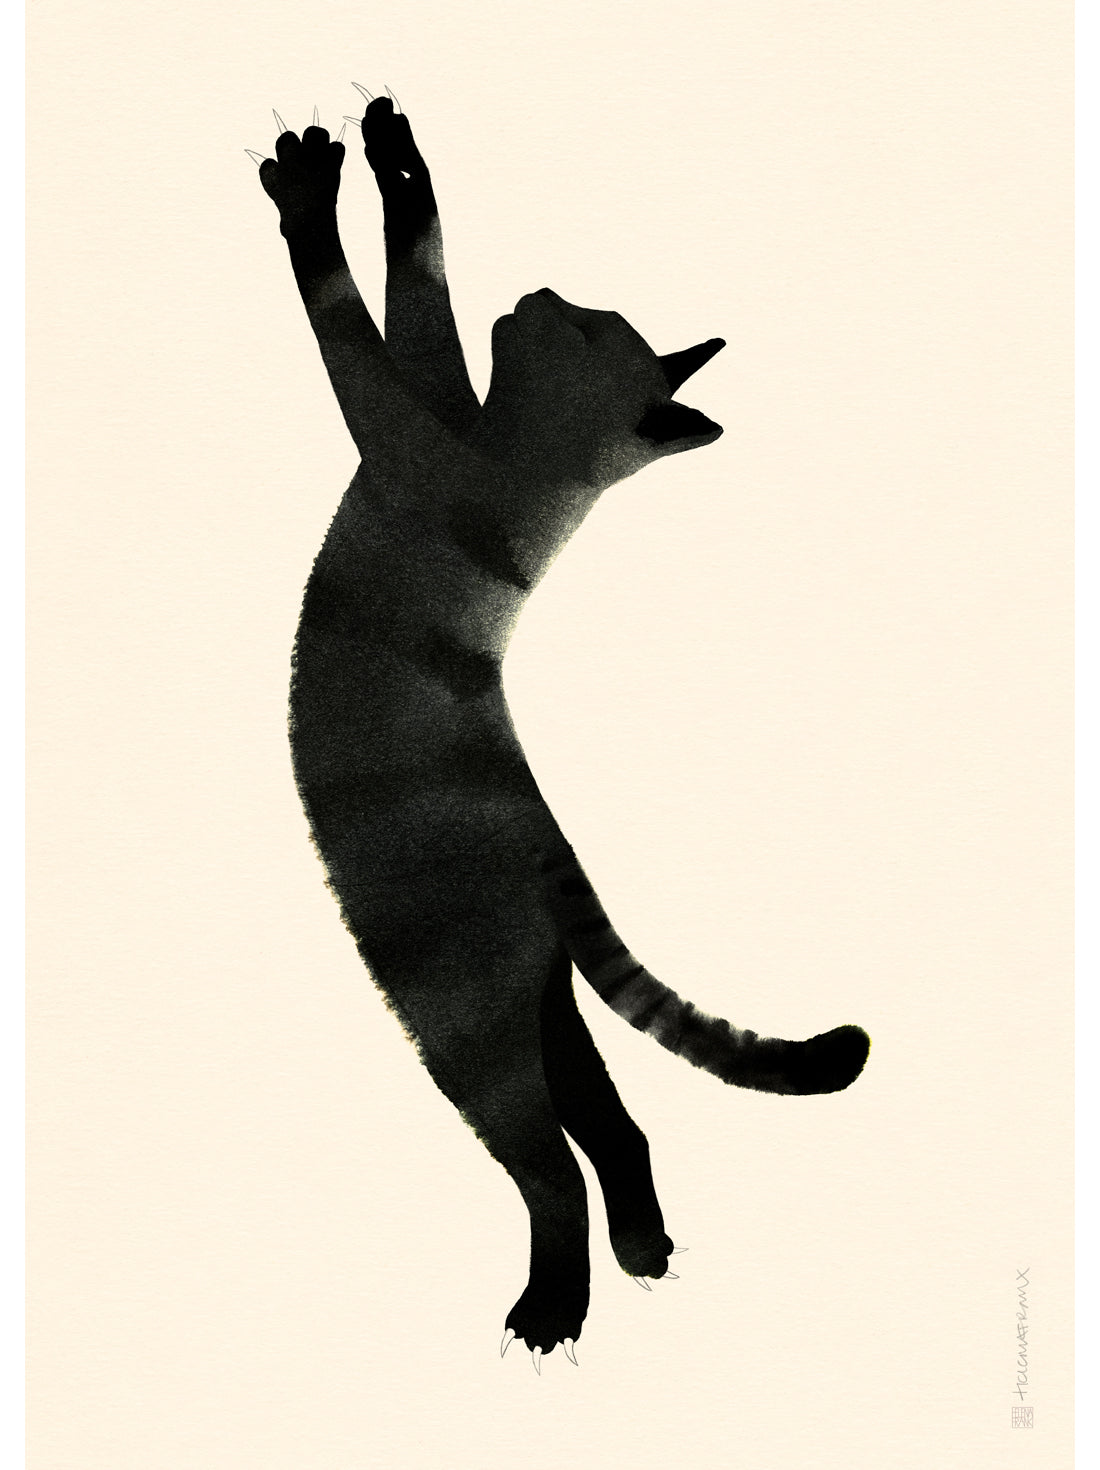 Black Cat illustration